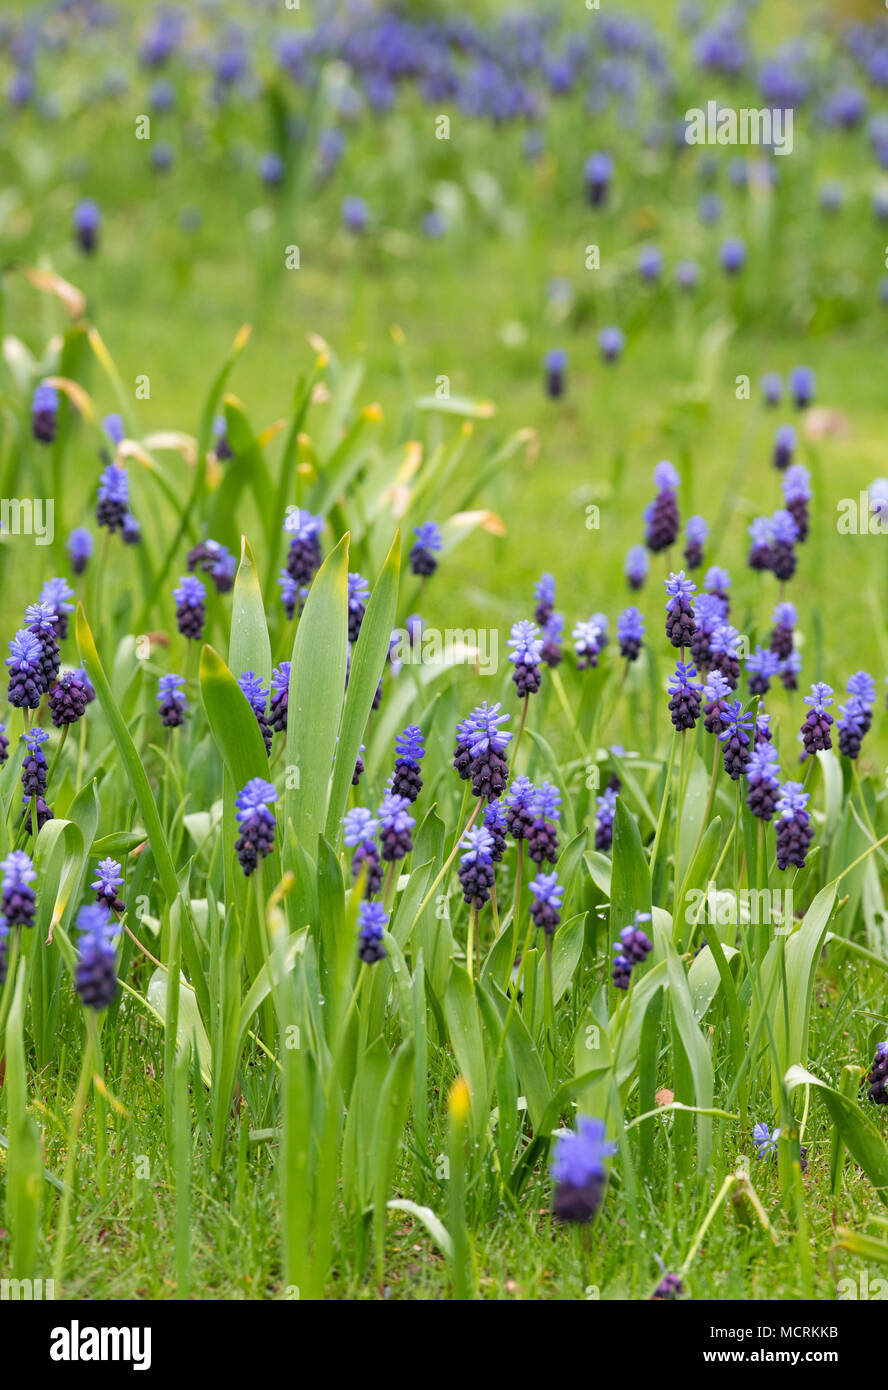 Muscari Latifolium Broad Leaved Grape Hyacinth Flowers In An English Garden Lawn Uk Stock Photo Alamy